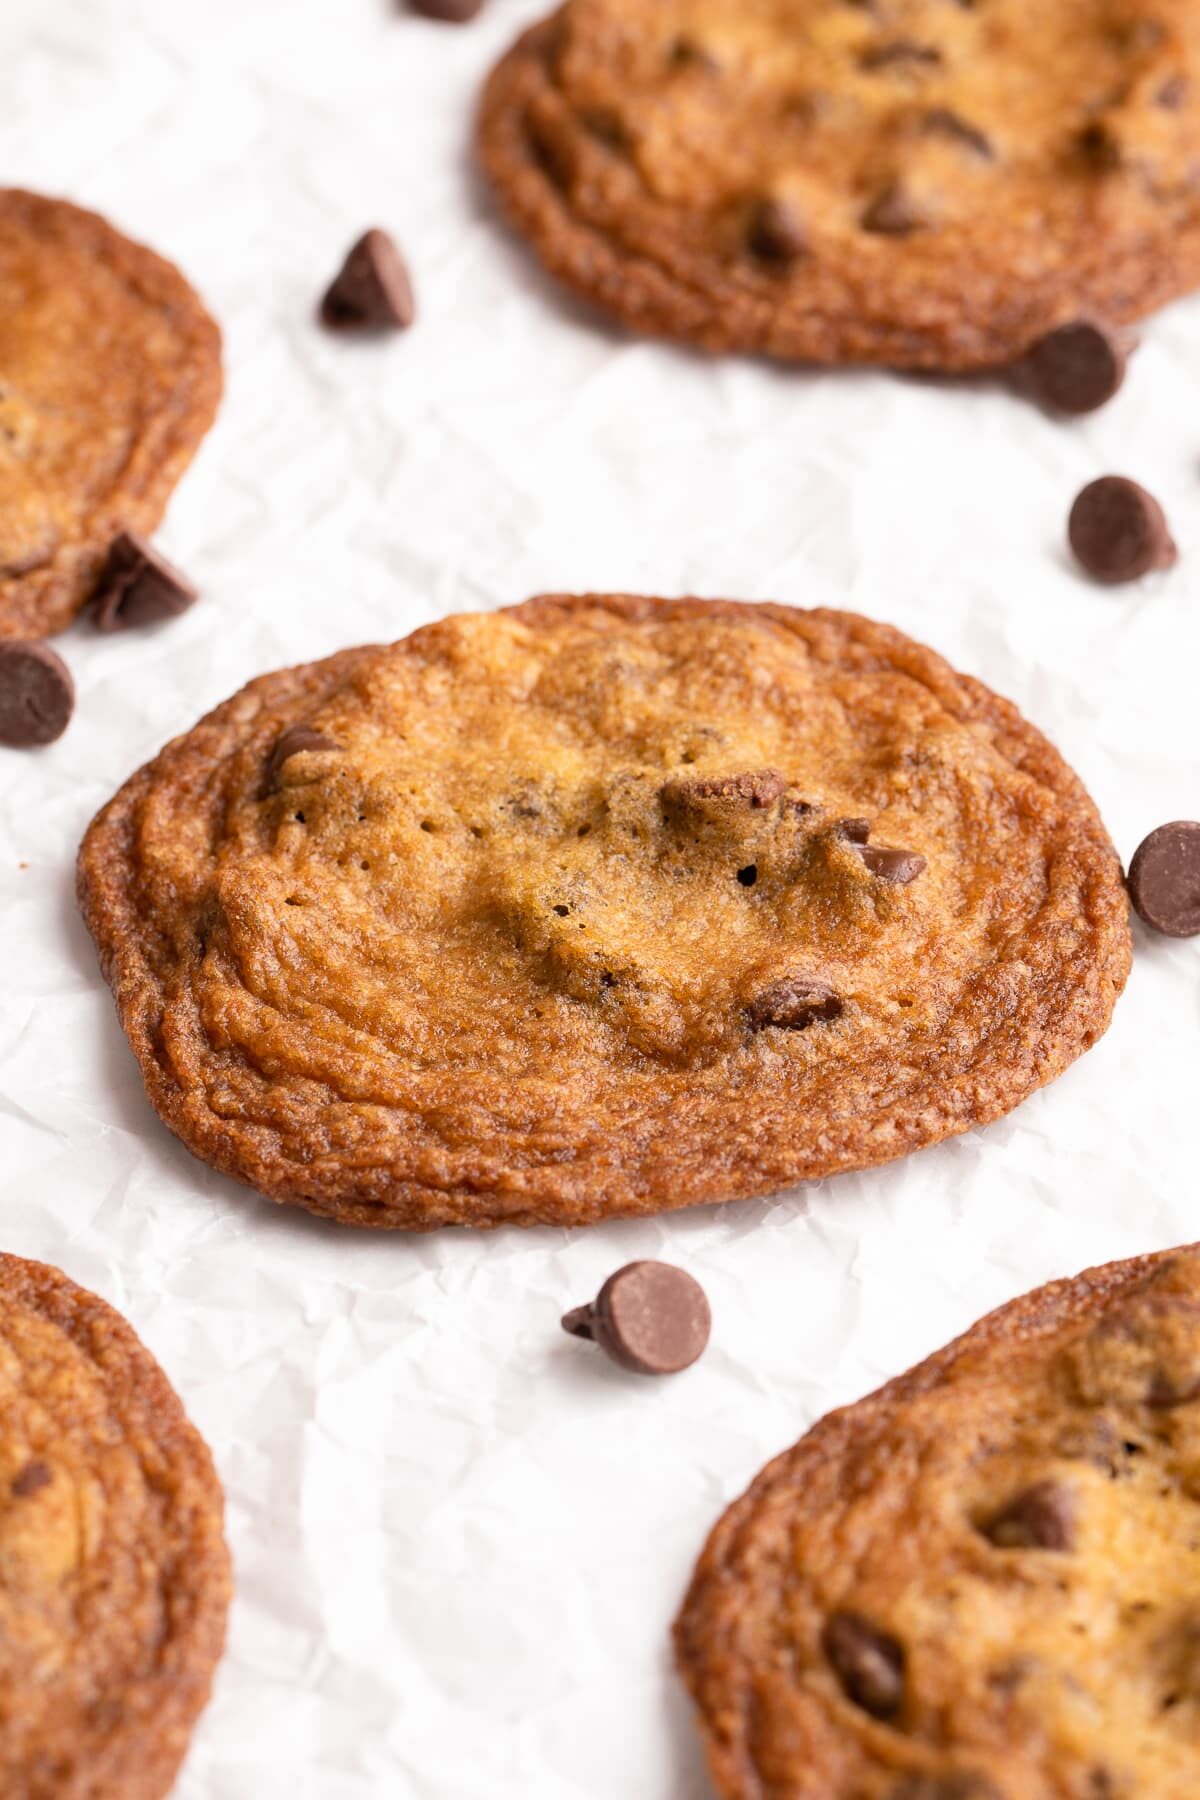 crispy chocolate chip cookies up close.